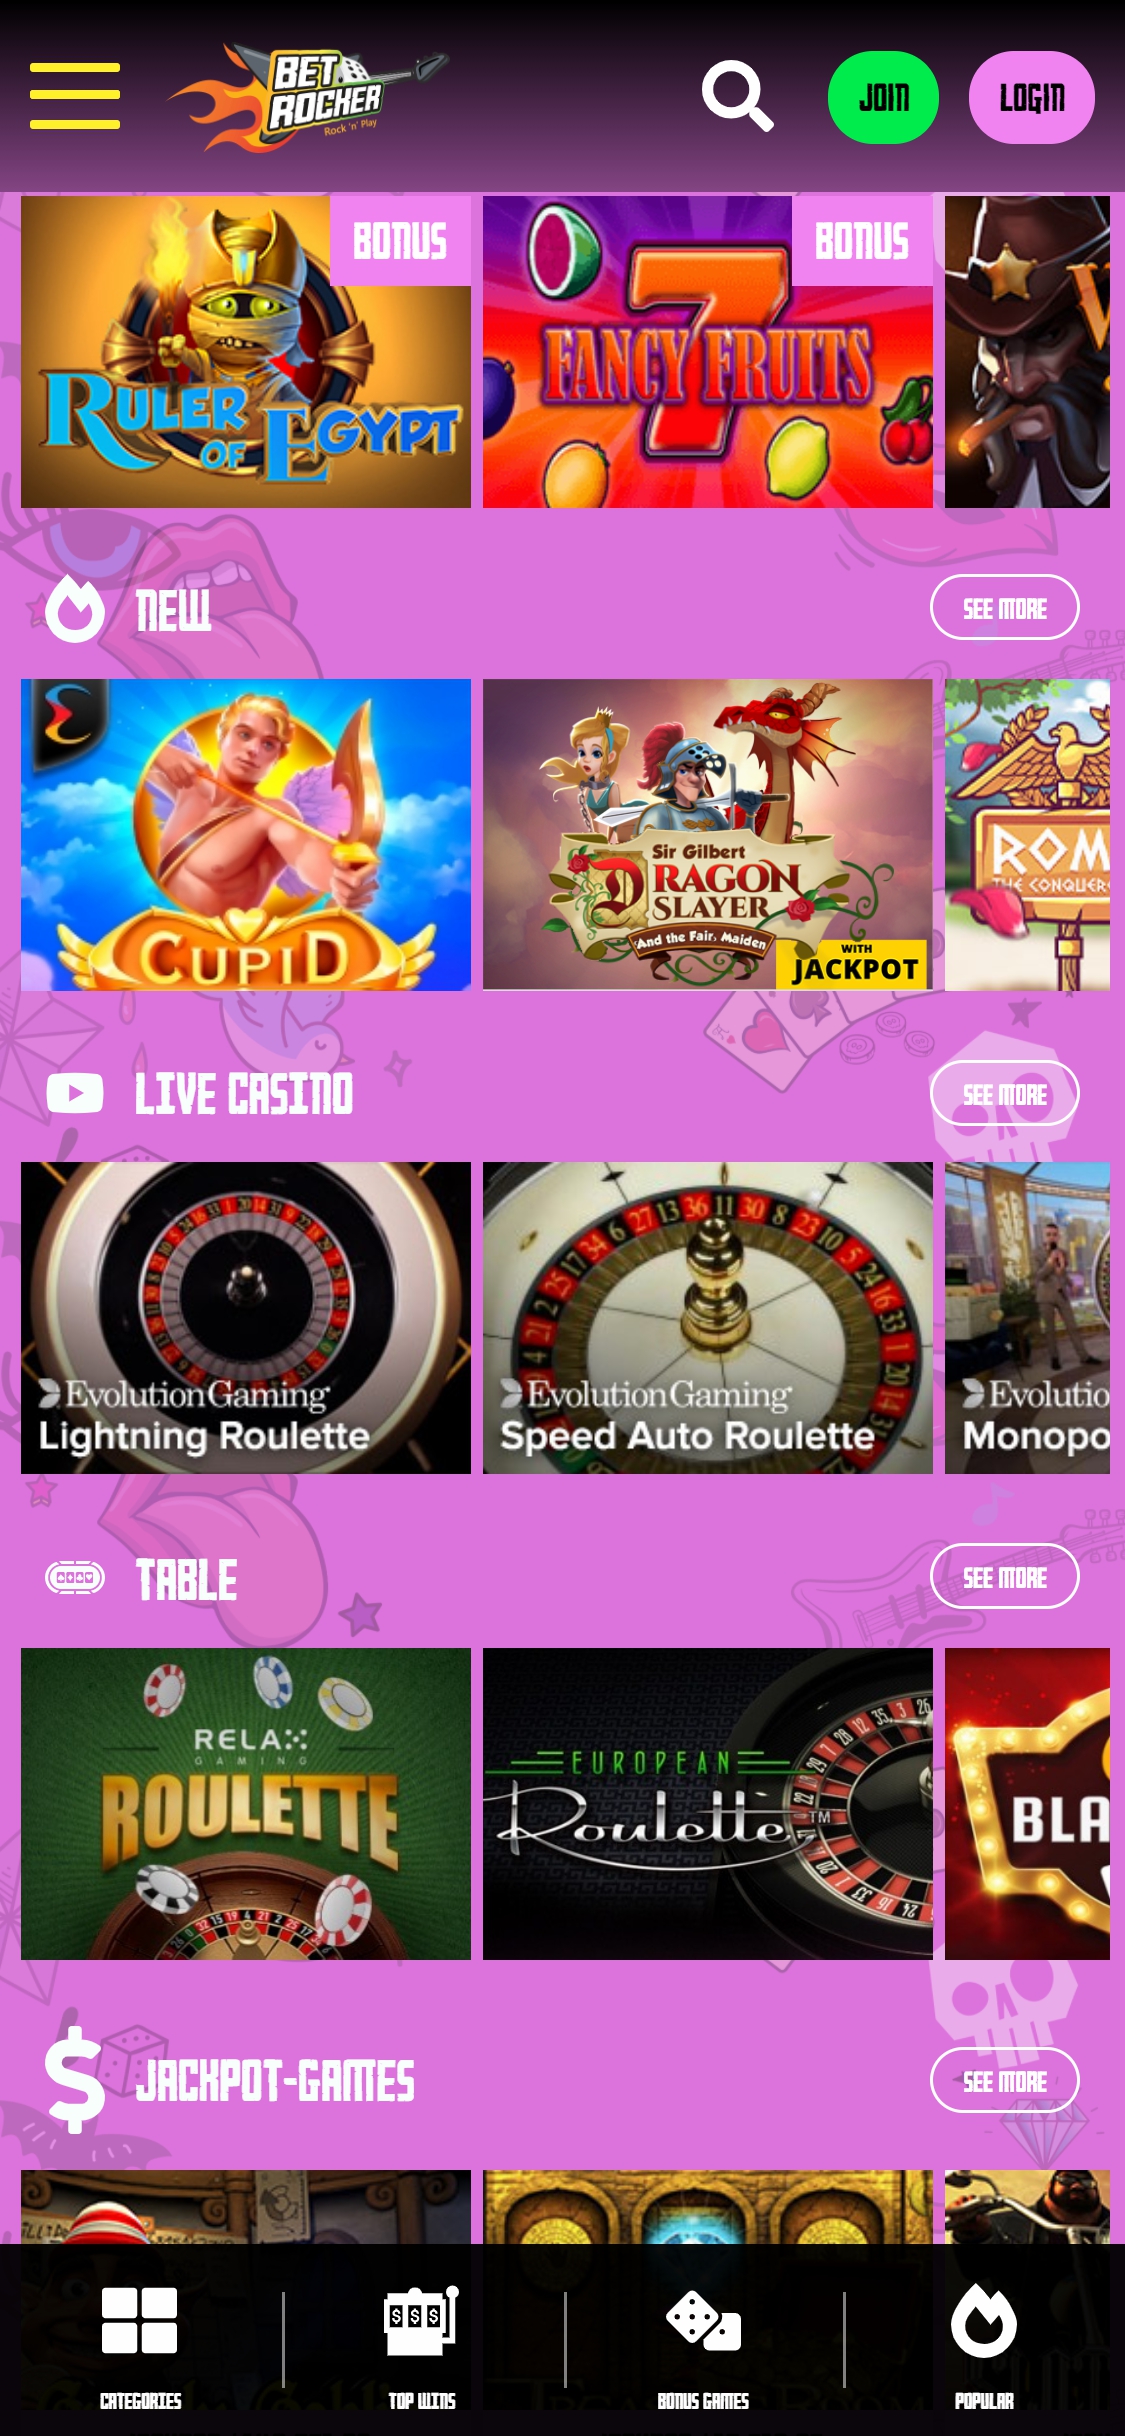 Betrocker Casino Mobile Games Review